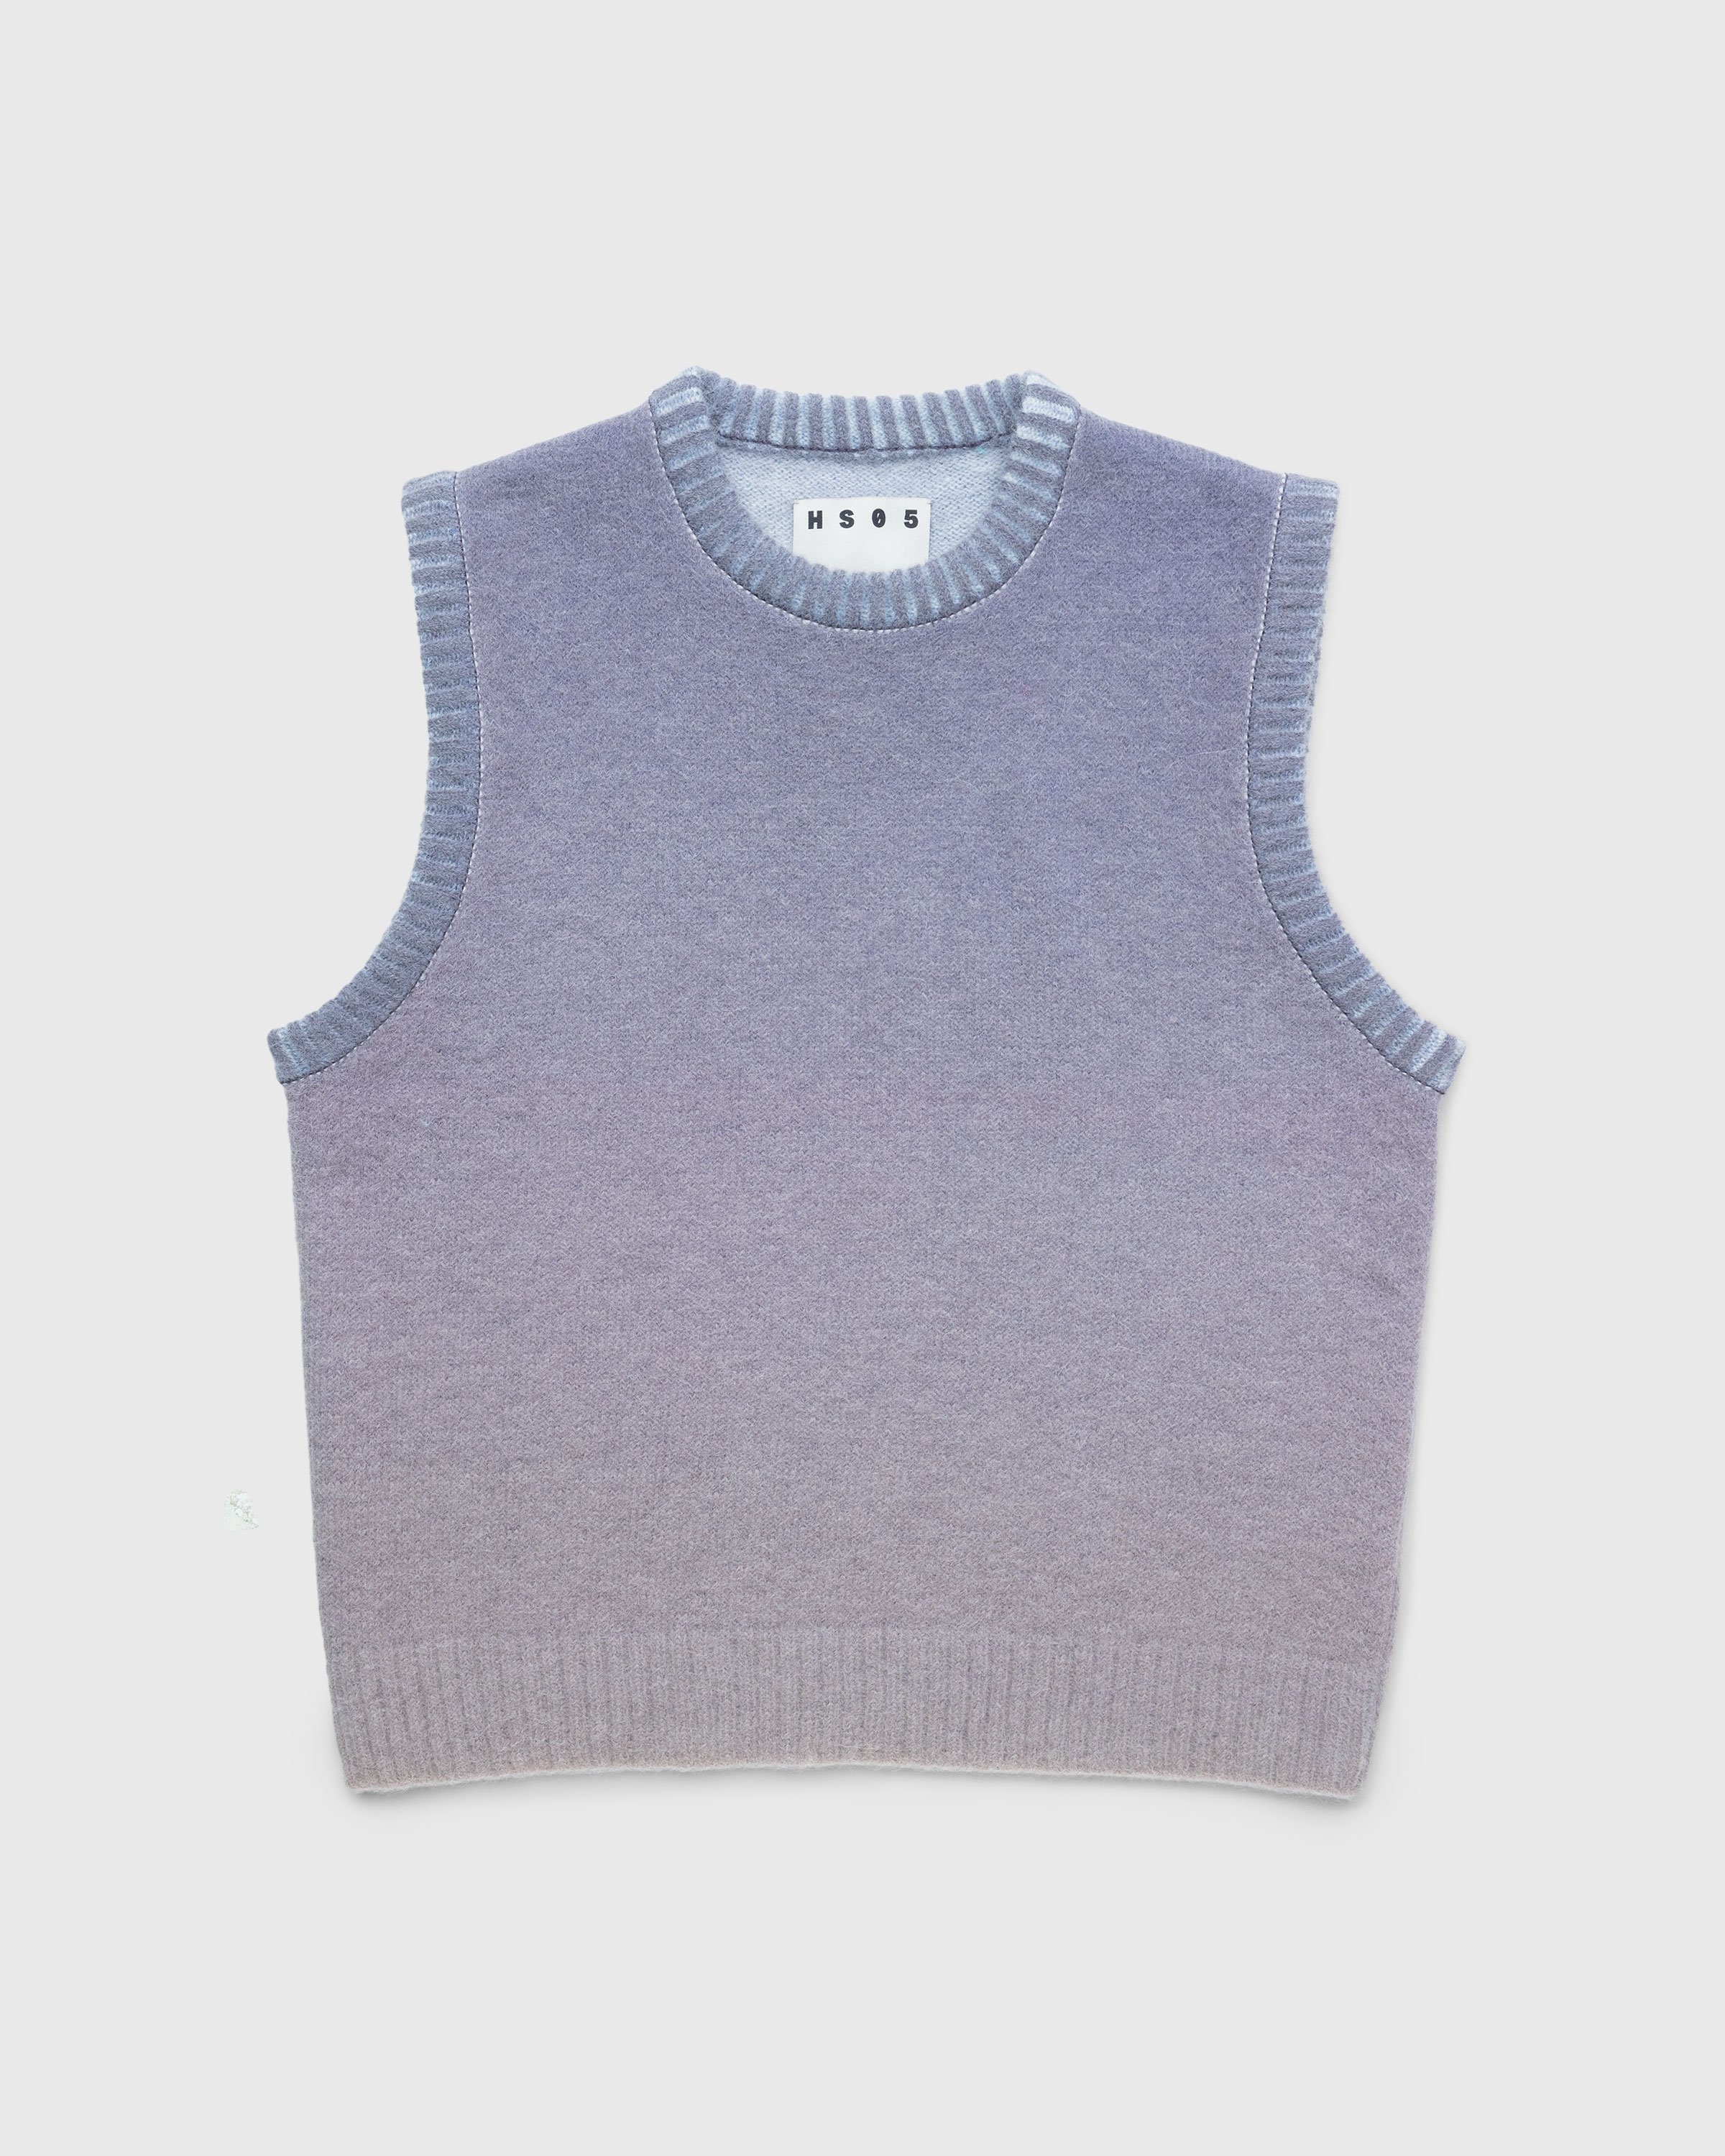 Highsnobiety HS05 – Alpaca Gradient Sweater Vest - Knitwear - Multi - Image 1